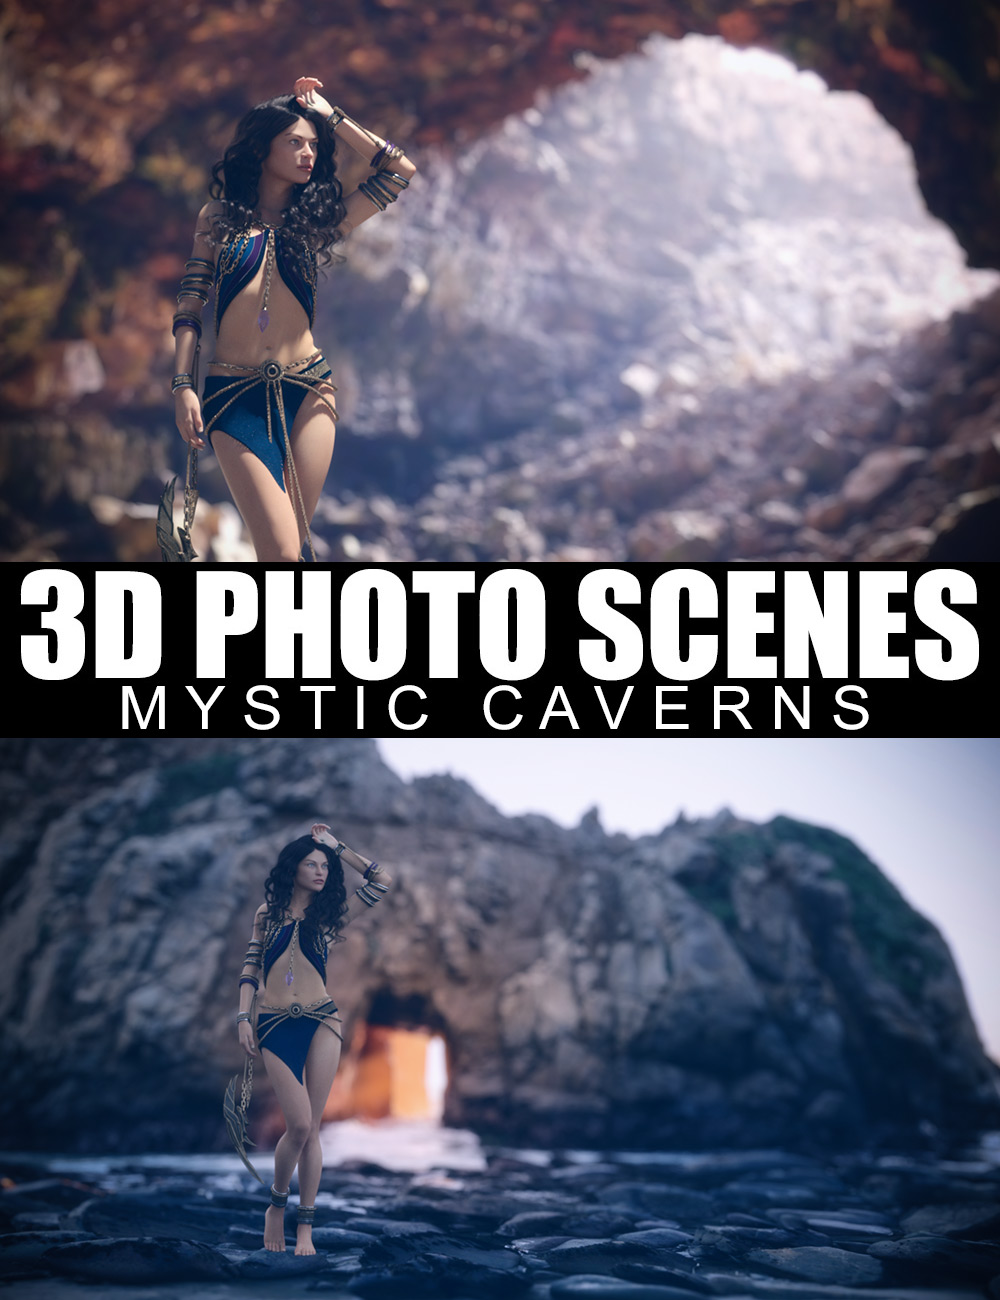 3D Photo Scenes - Mystic Caverns by: Dreamlight, 3D Models by Daz 3D